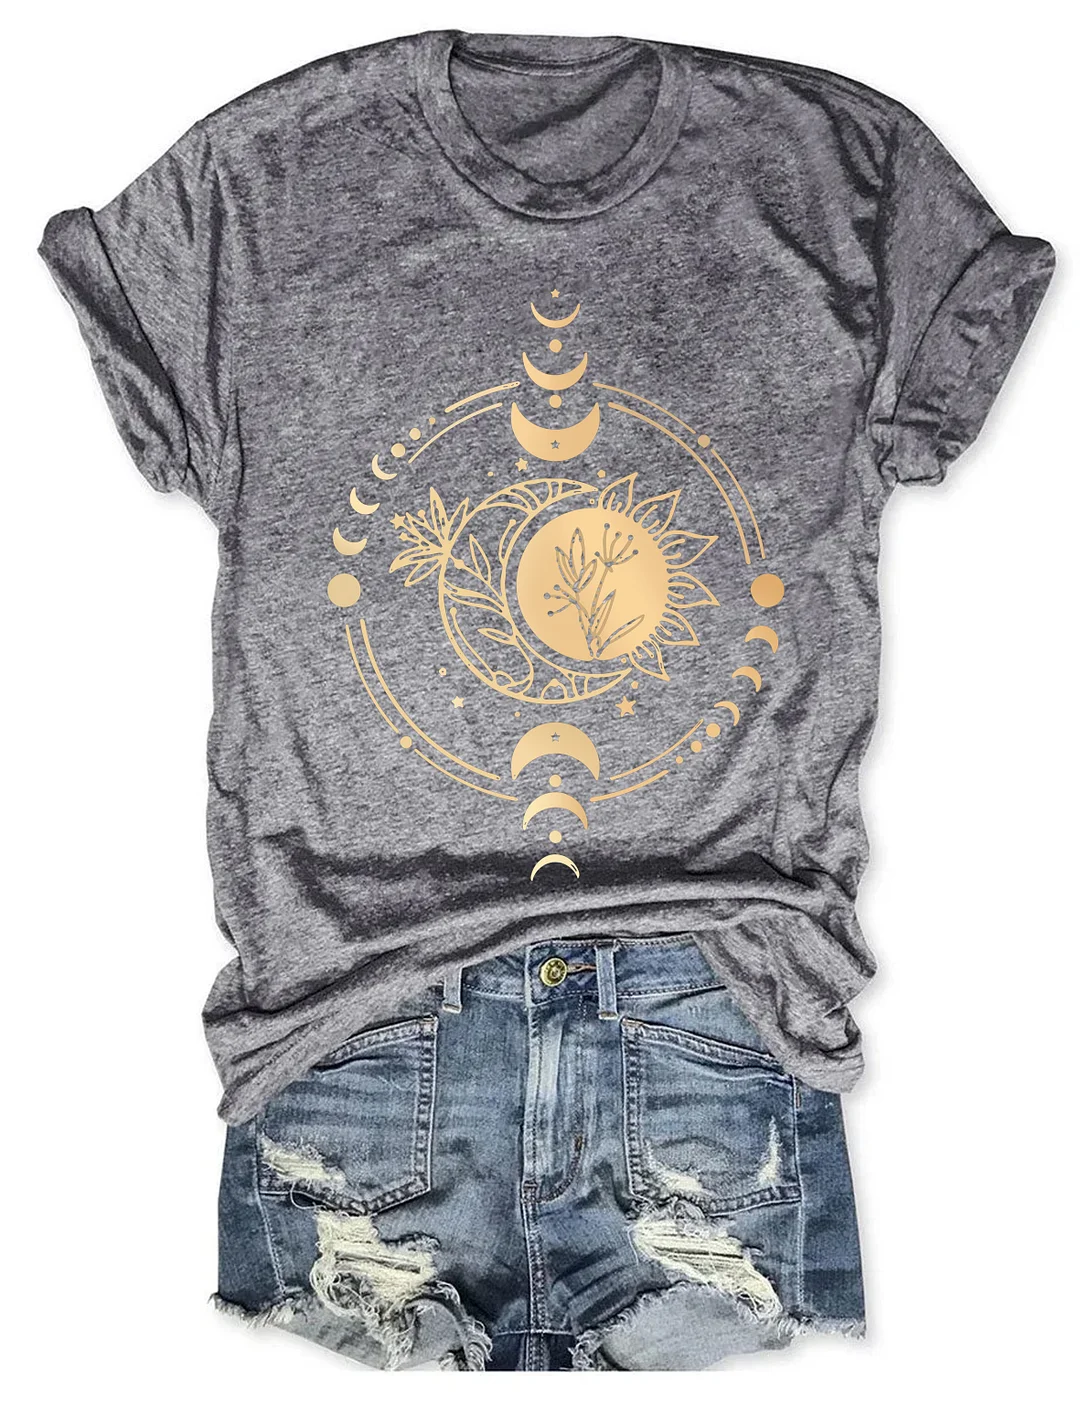 Shiny Mysterious Moon Phase T-shirt